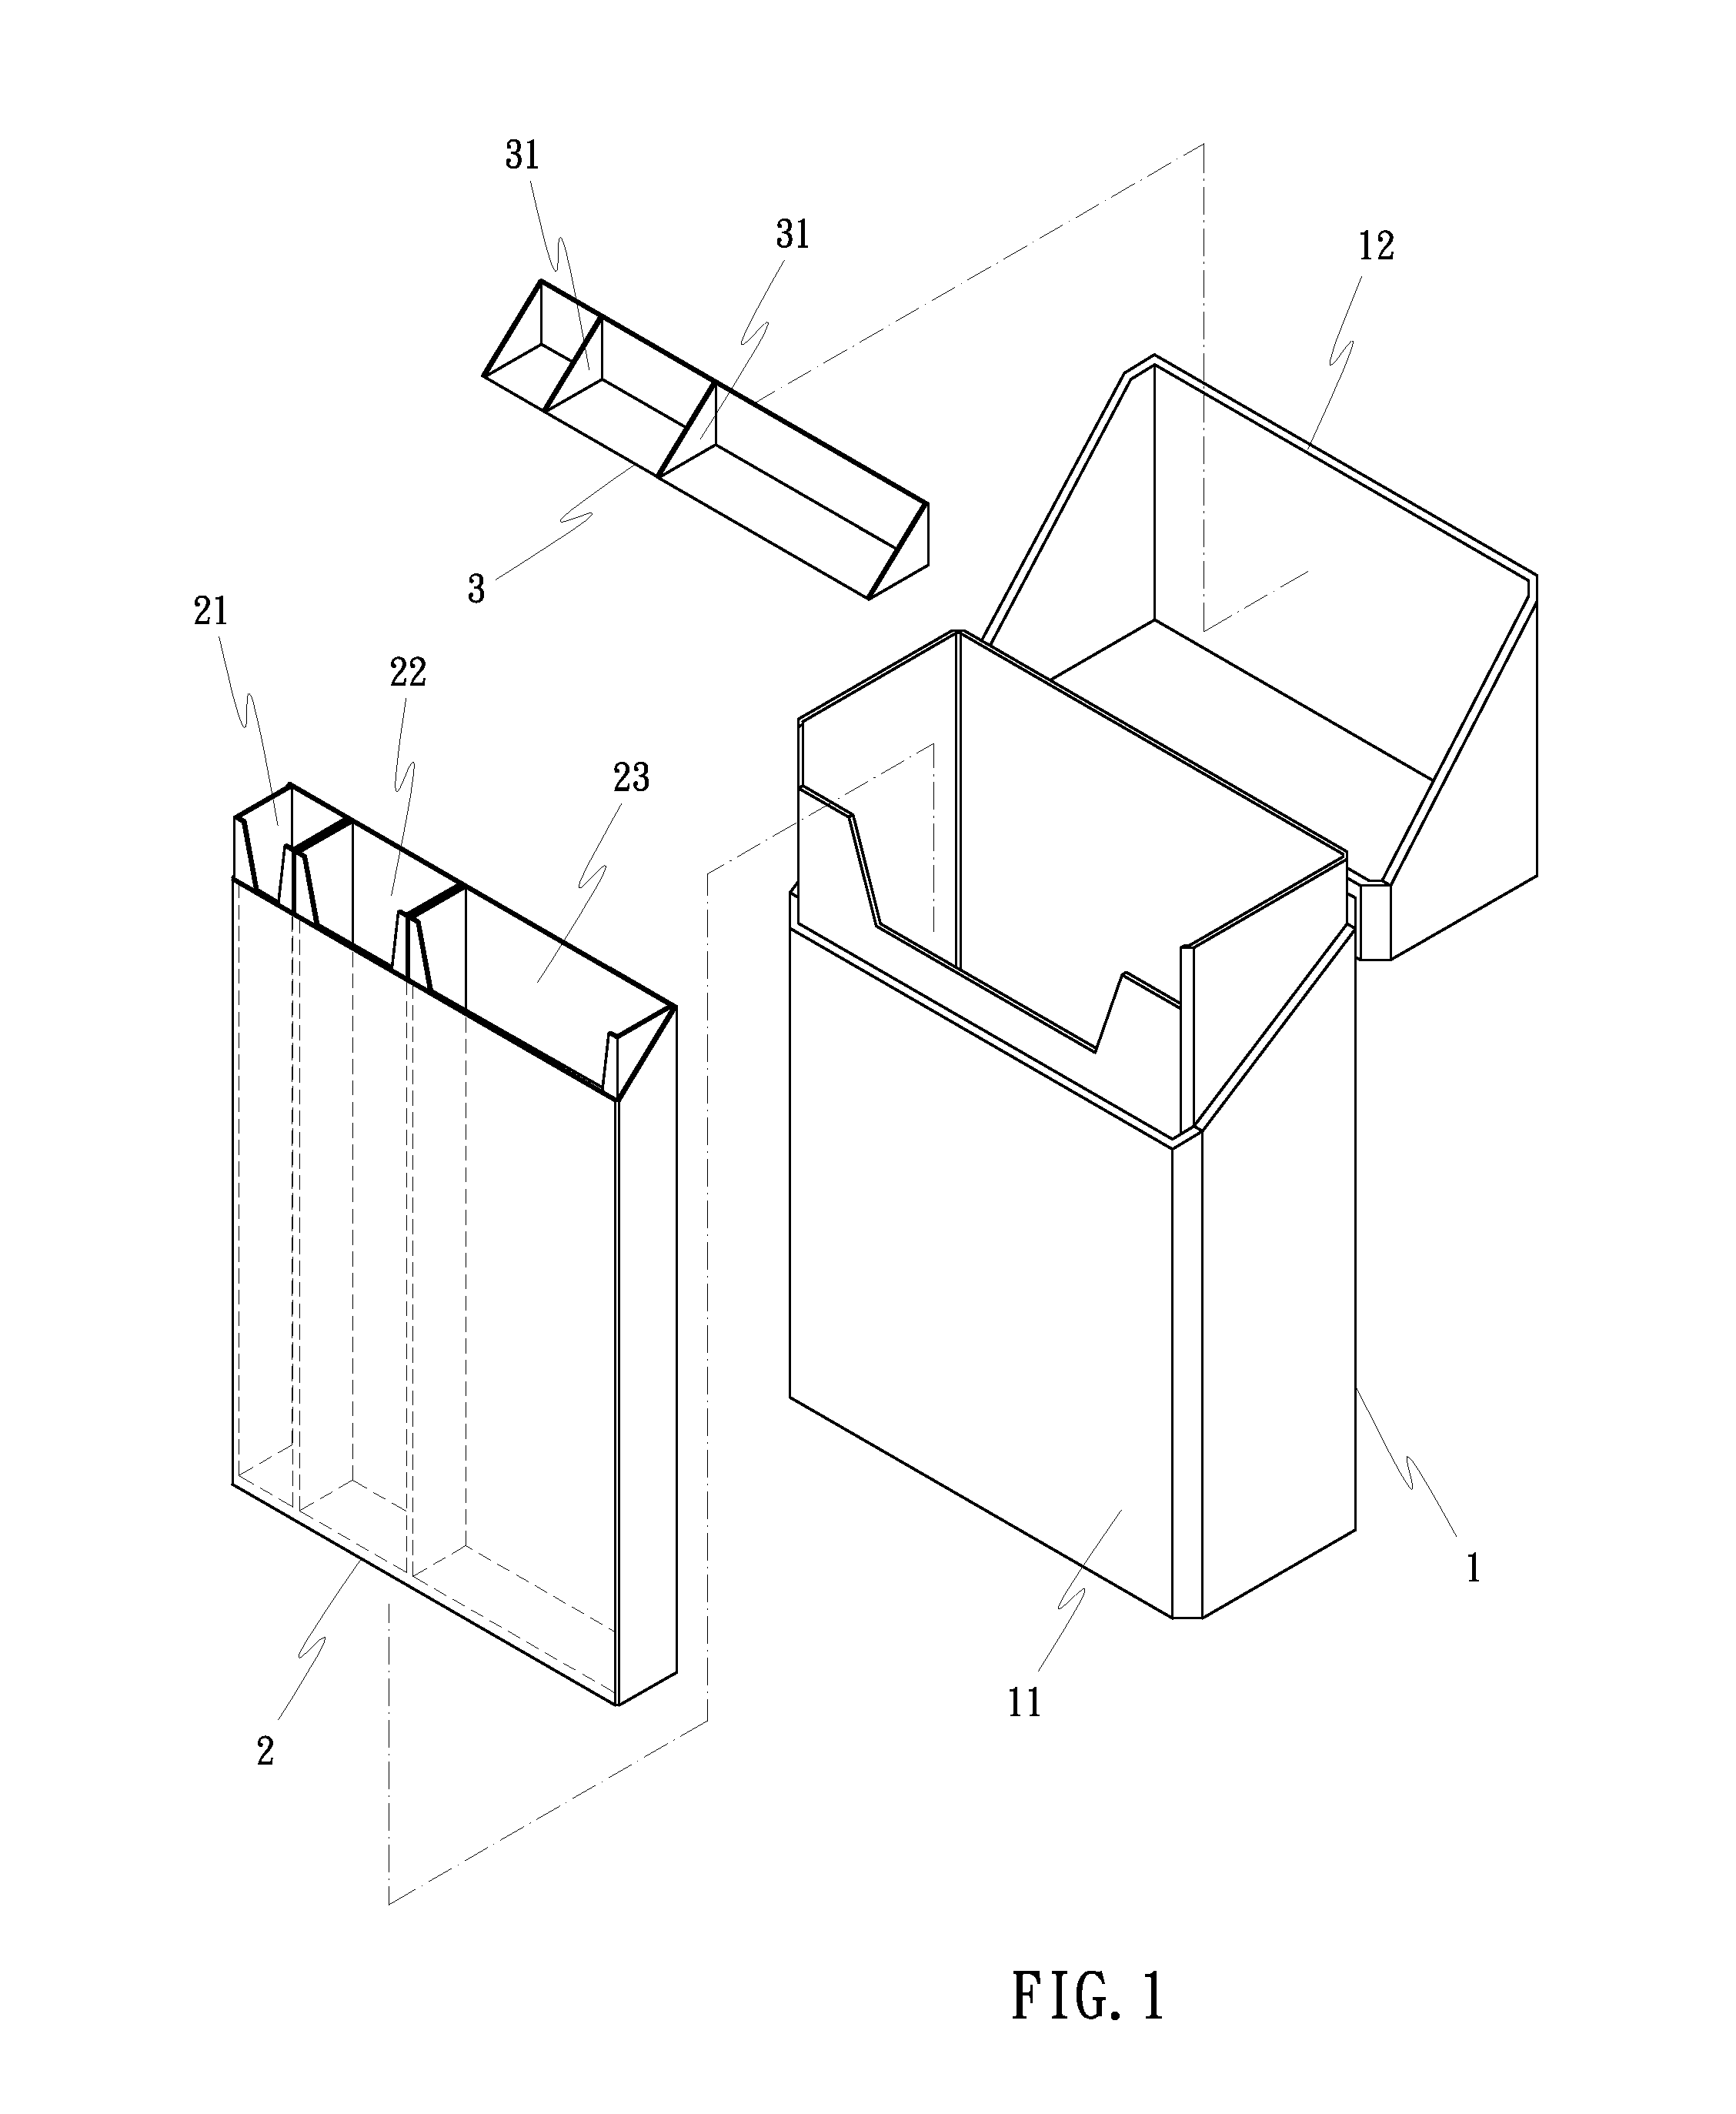 Cigarette box structure capable of receiving cigarette butts